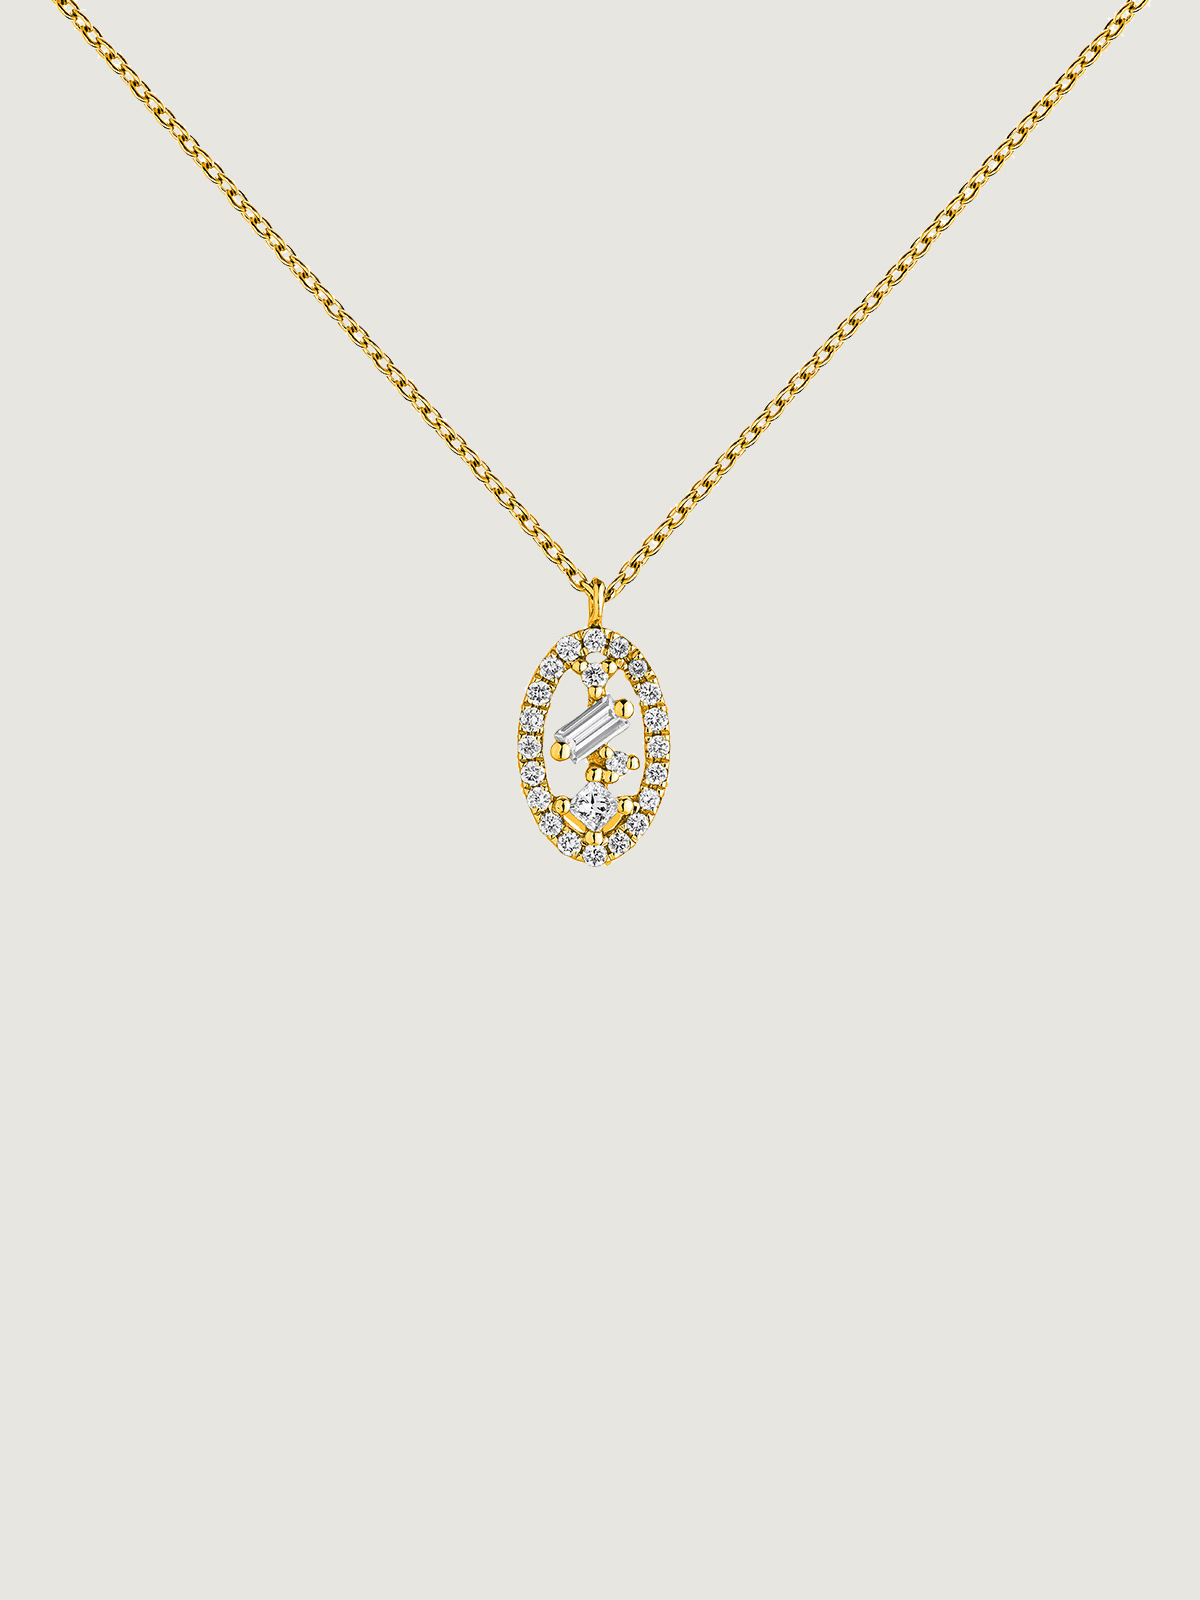 18K yellow gold pendant with diamond oval.